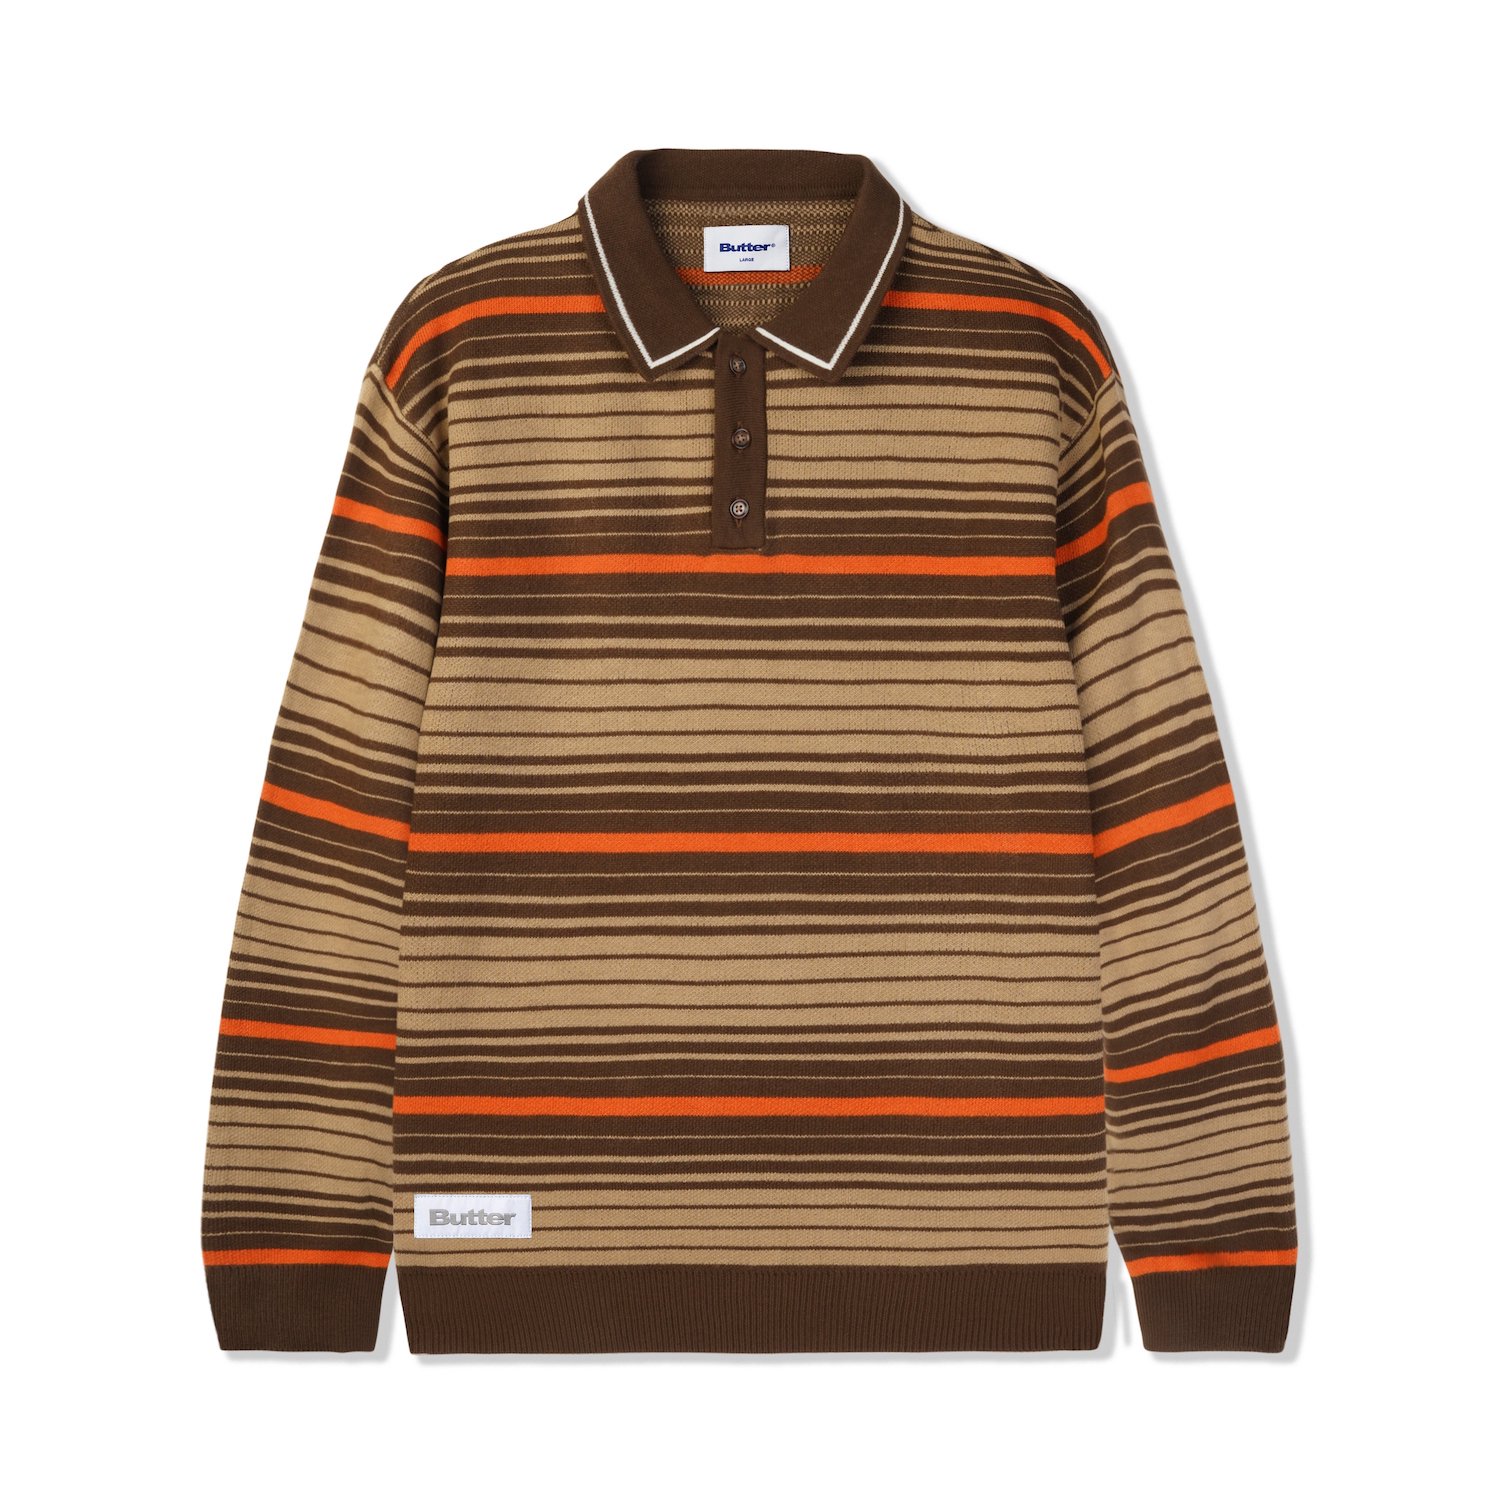 BUTTER GOODS<br>Stripe knitted Shirt<br>